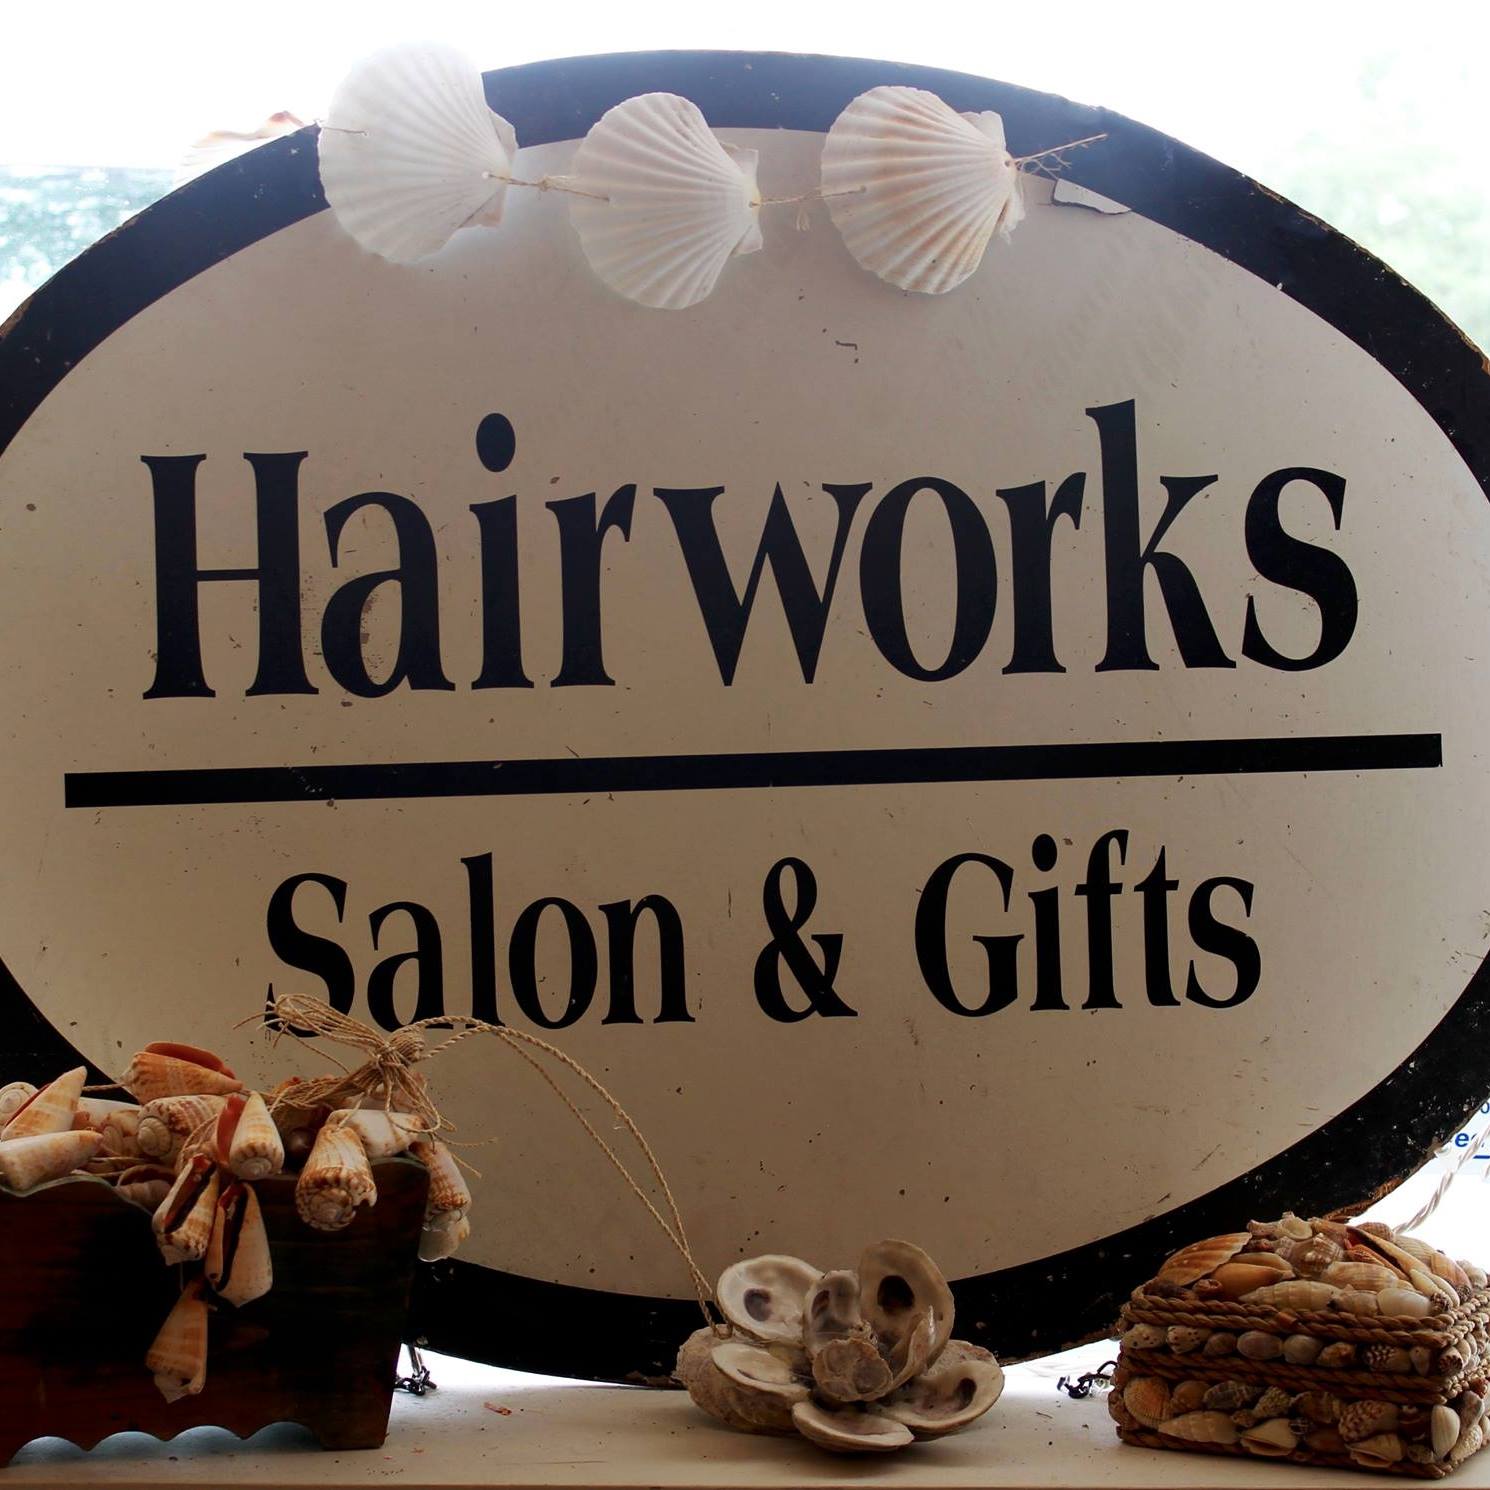 Hairworks Salon 102 Blaize Ave, Bay St Louis Mississippi 39520